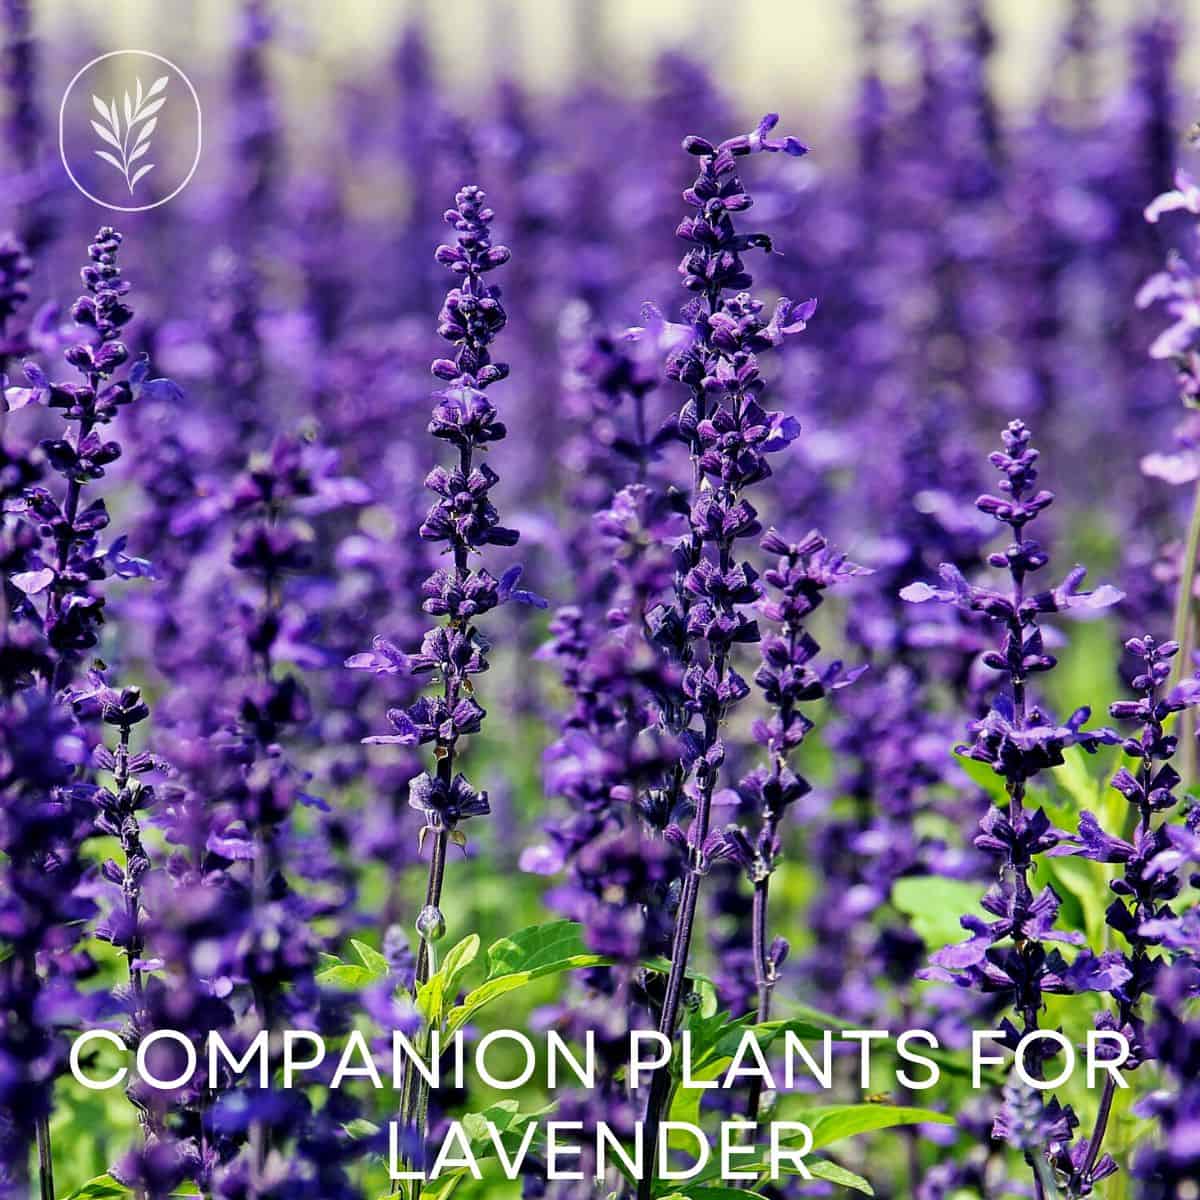 Companion plants for lavender via @home4theharvest